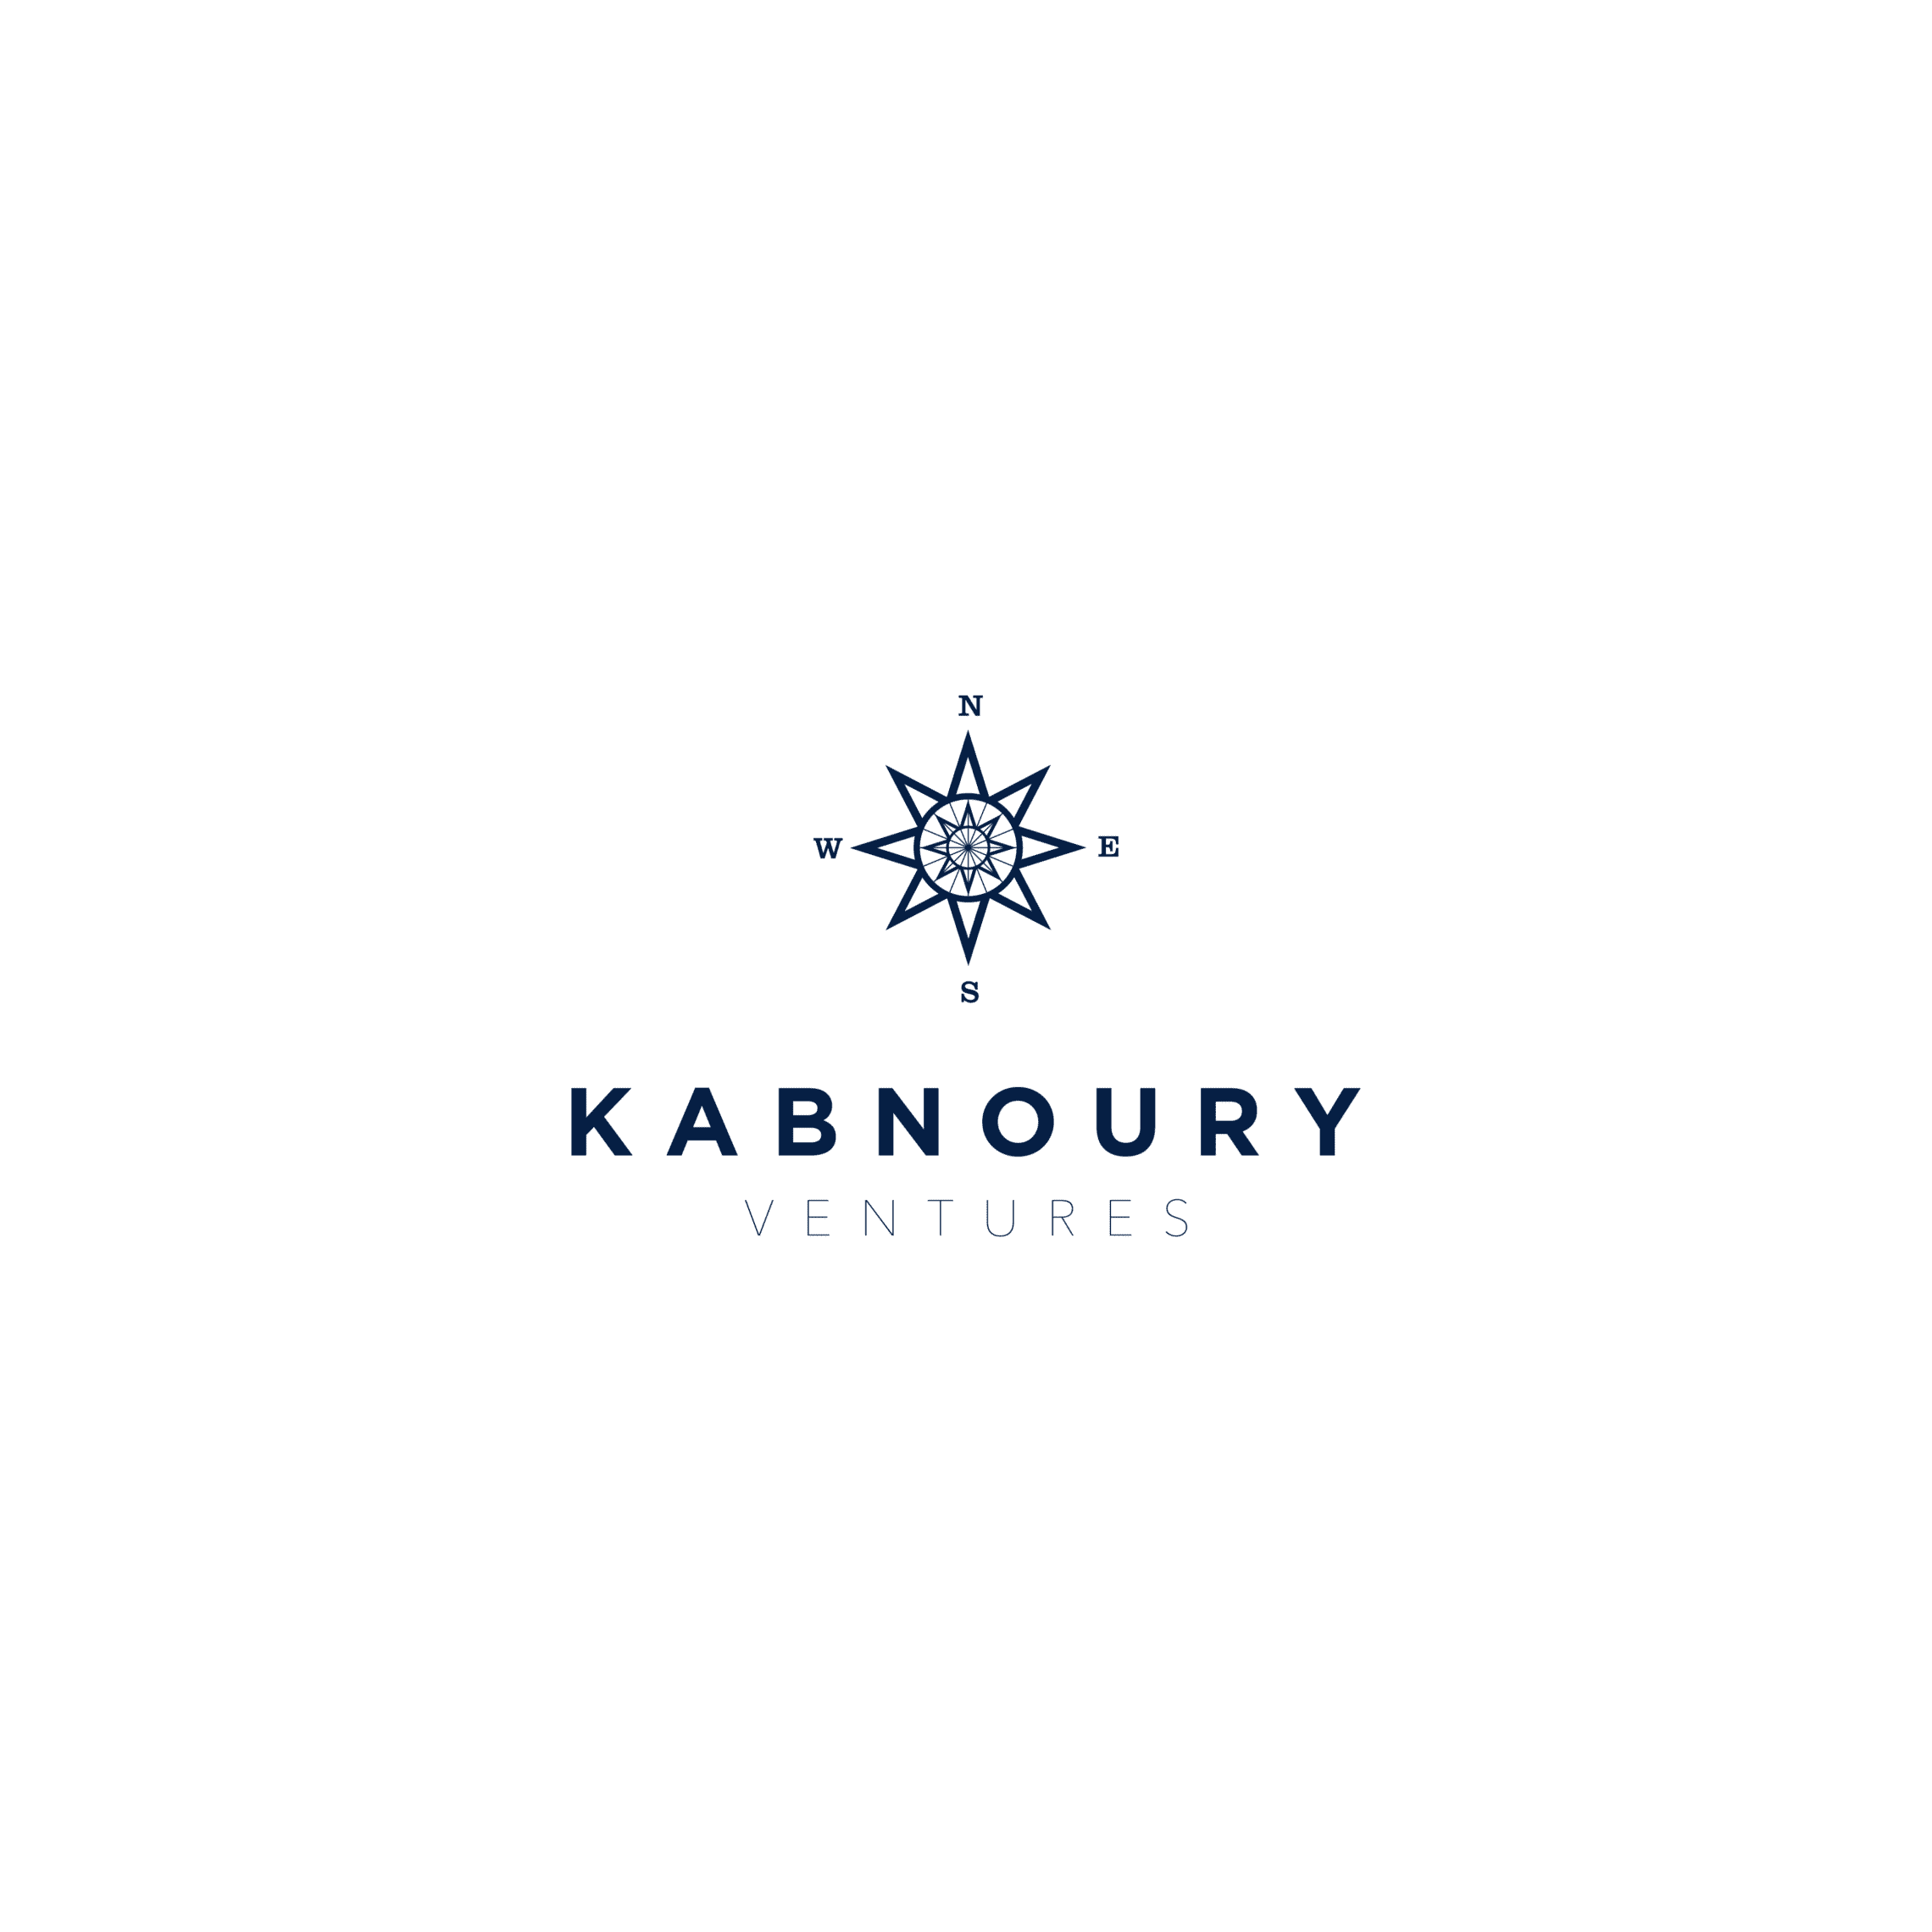 Kabnoury ventures